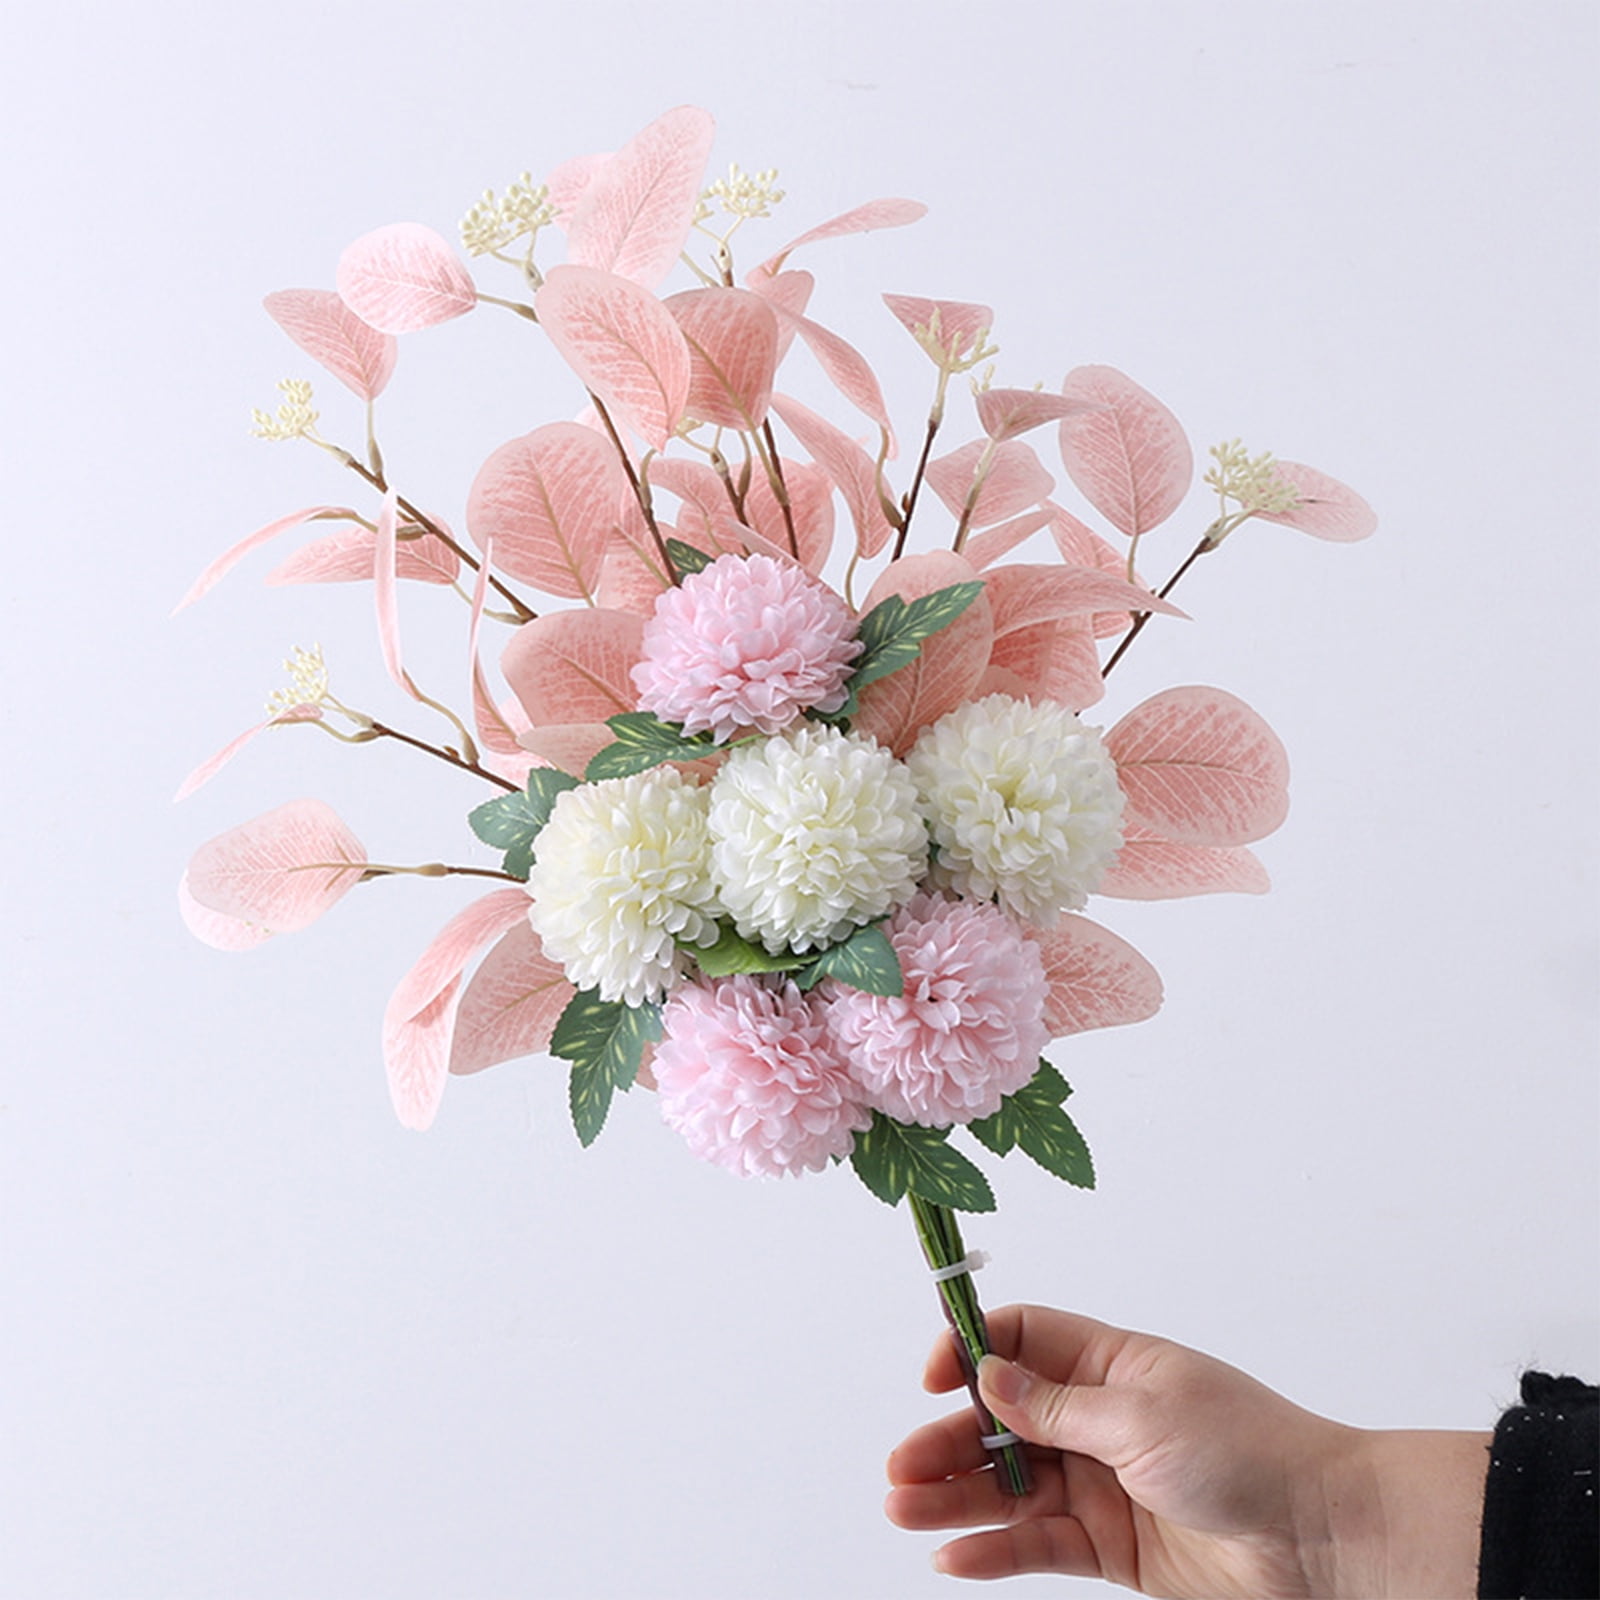 INS Peonies and Dandelions Artificial Flowers Bouquet for Home Decor, – BBJ  WRAPS